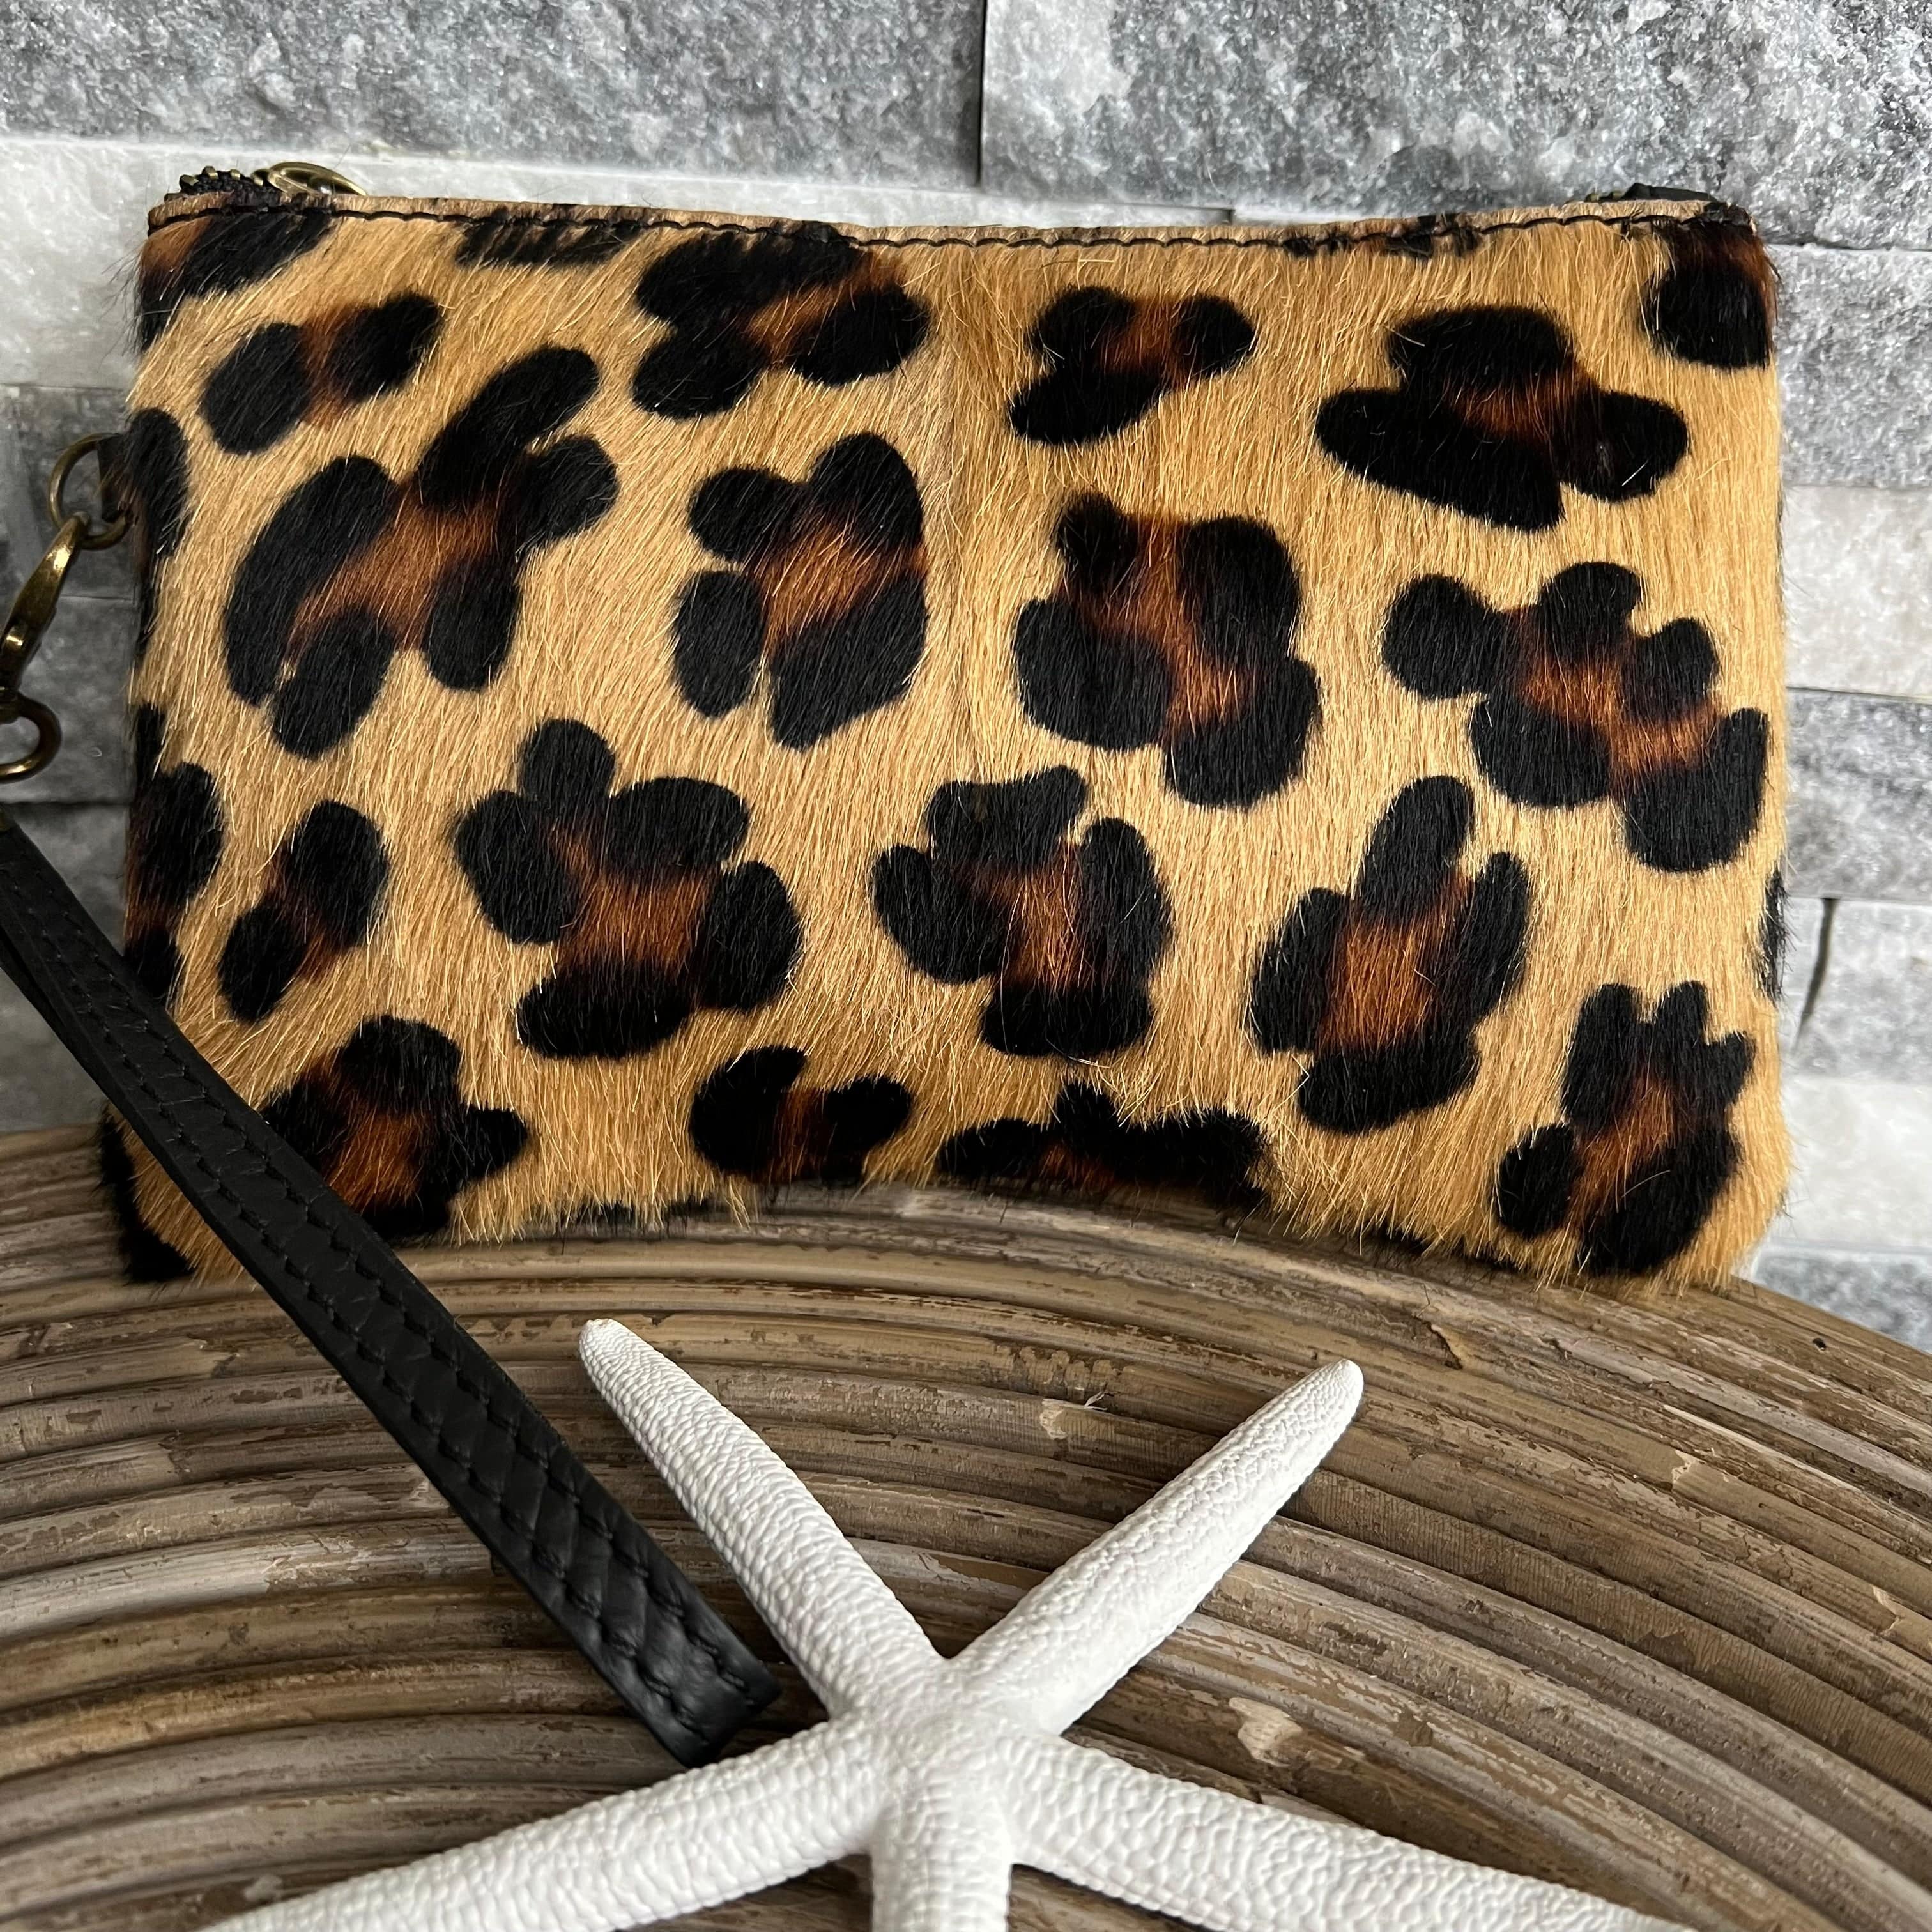 Juicy Couture Cheetah Wristlet Clutch Purse black gold/copper Leopard print  | eBay